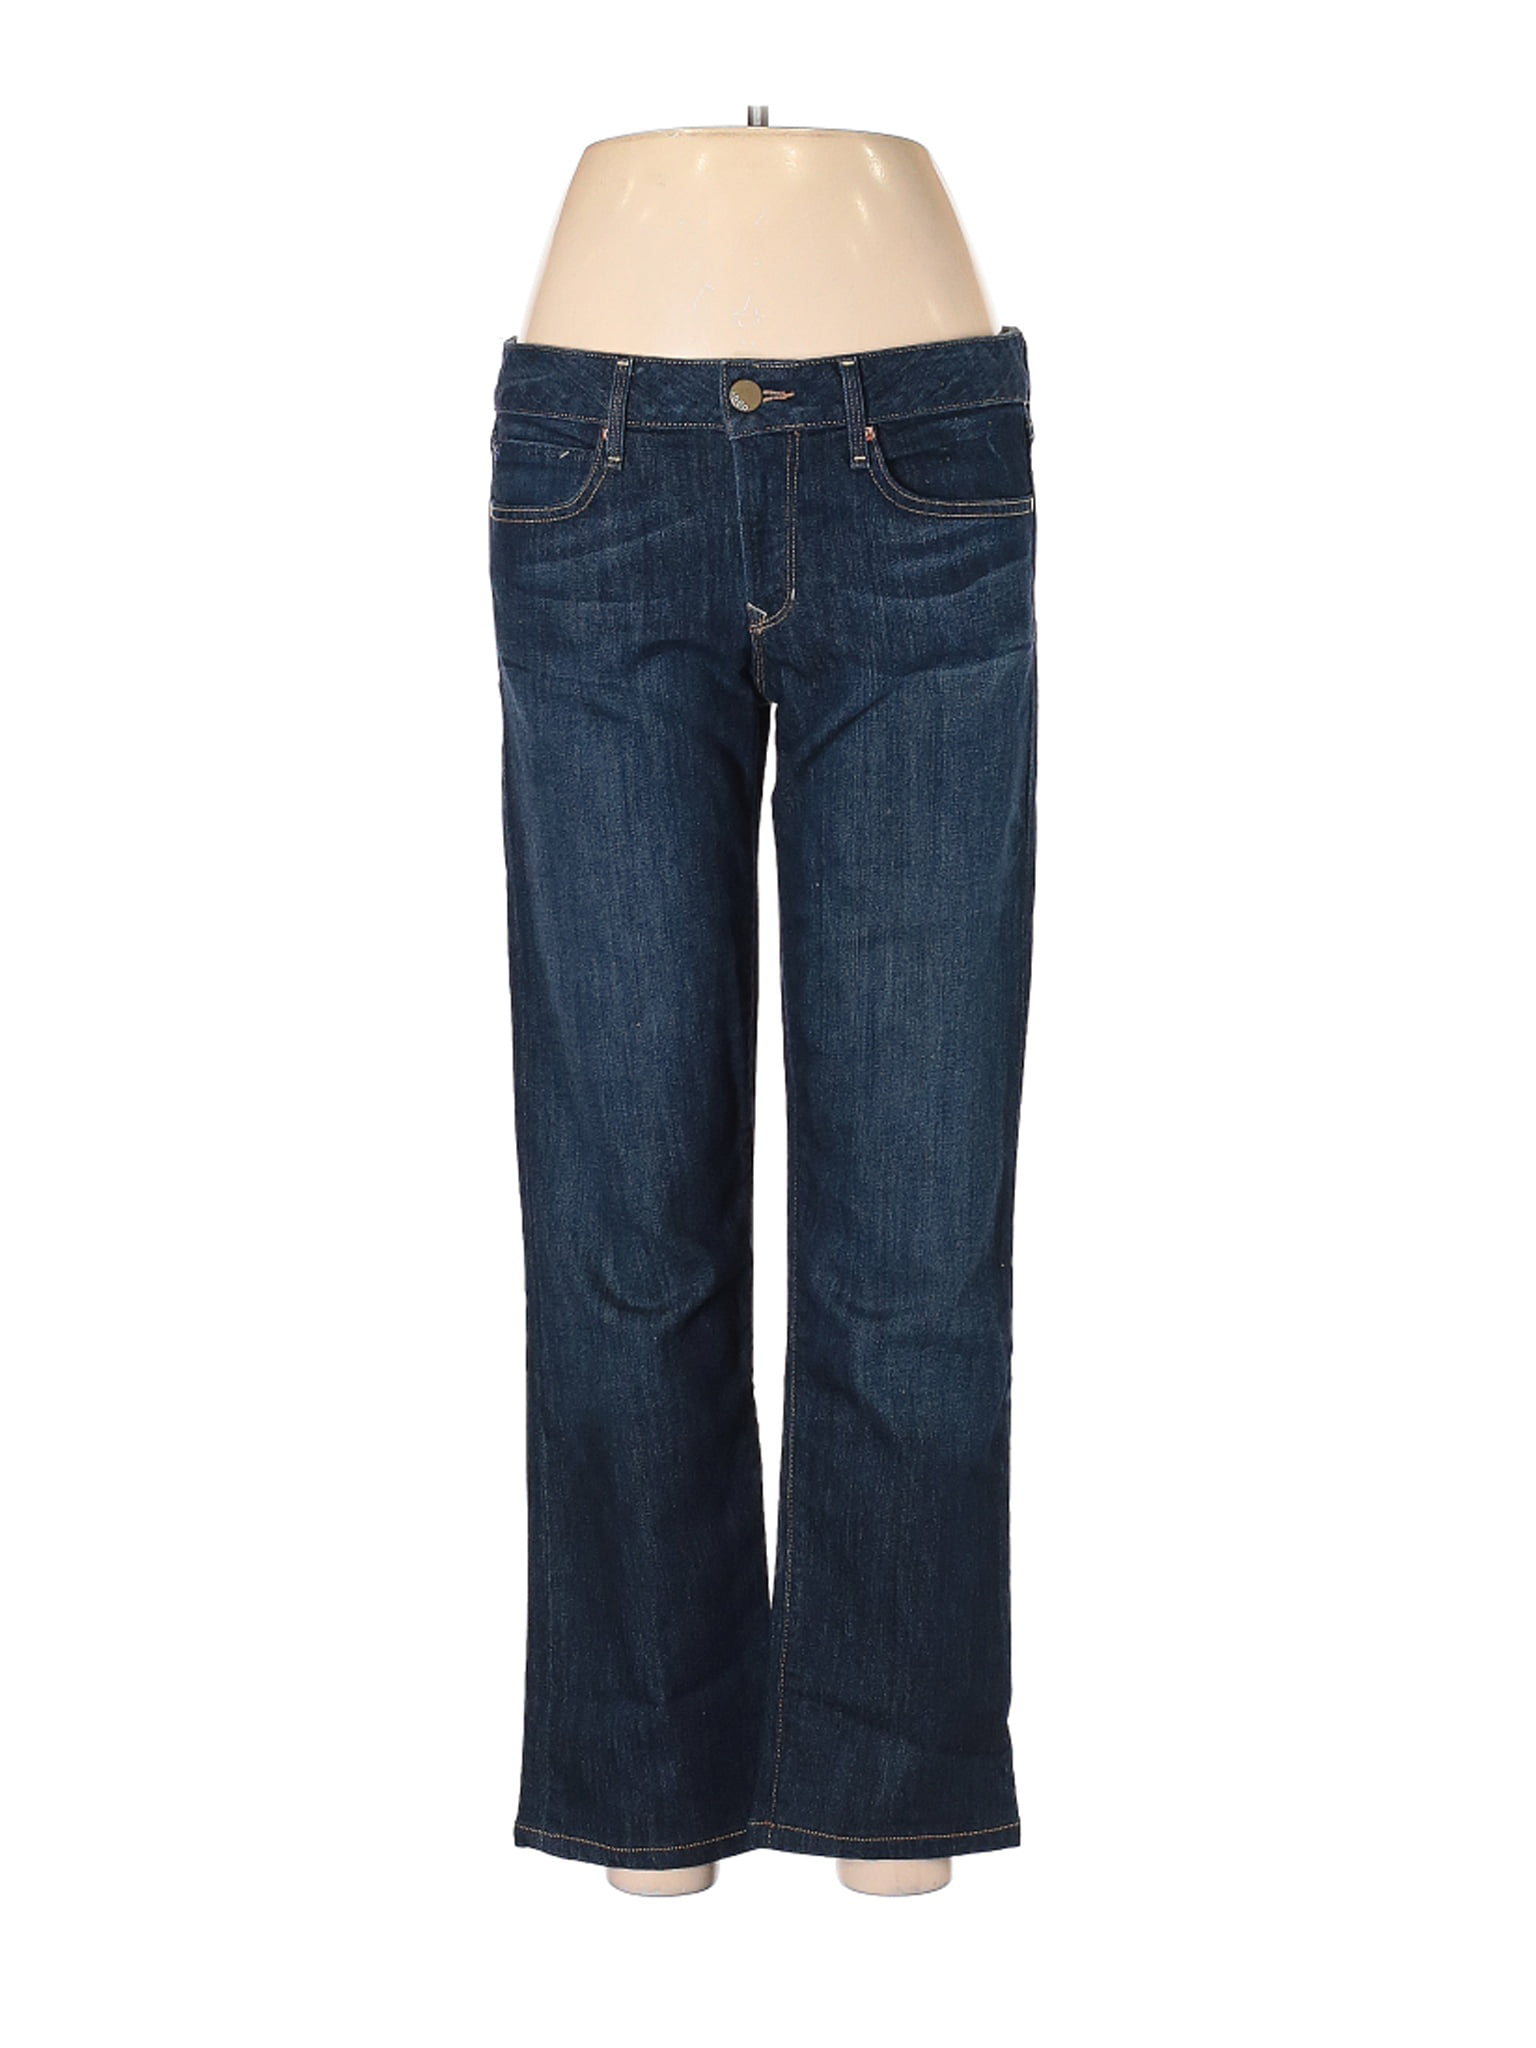 Gap - Pre-Owned Gap Women's Size 29W Jeans - Walmart.com - Walmart.com